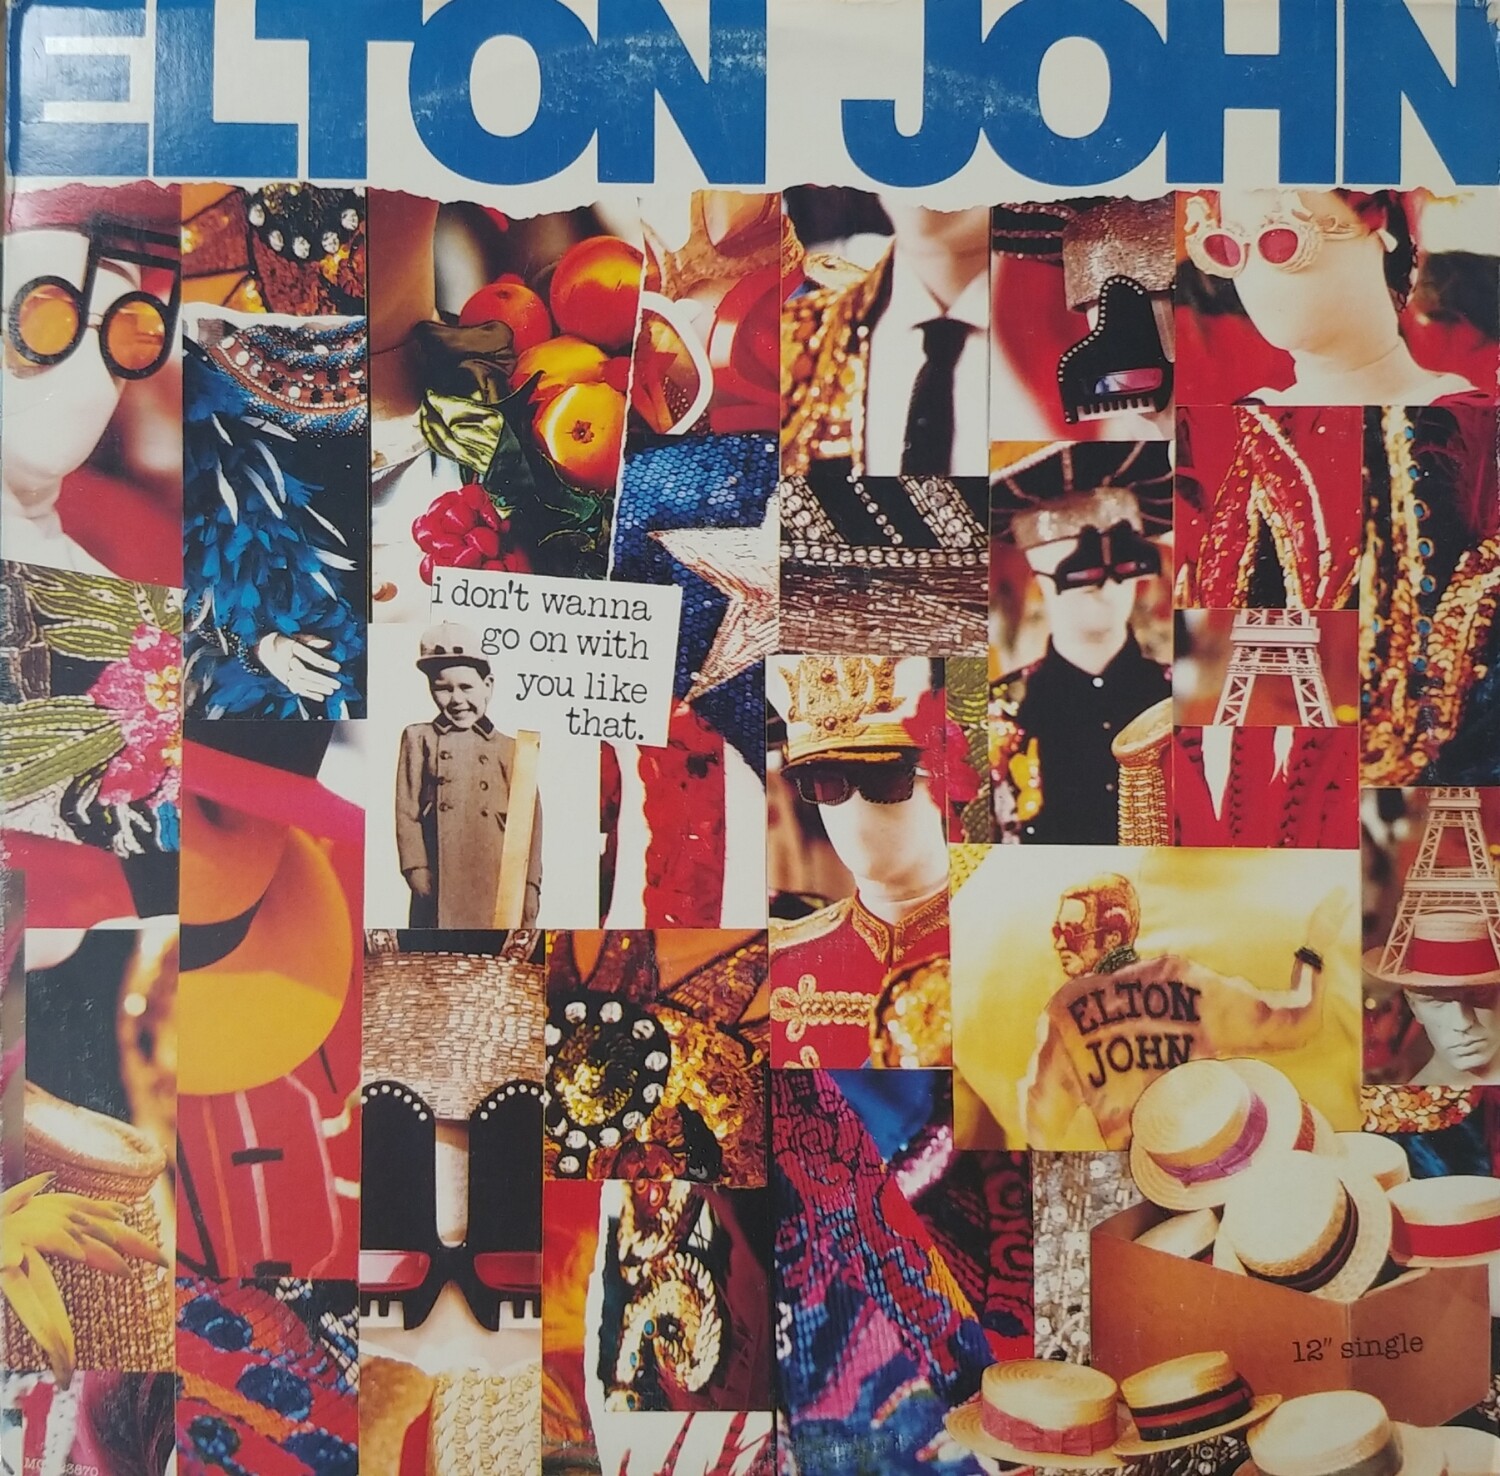 Elton John - I Don't Wanna Go On With You Like That (Maxi)